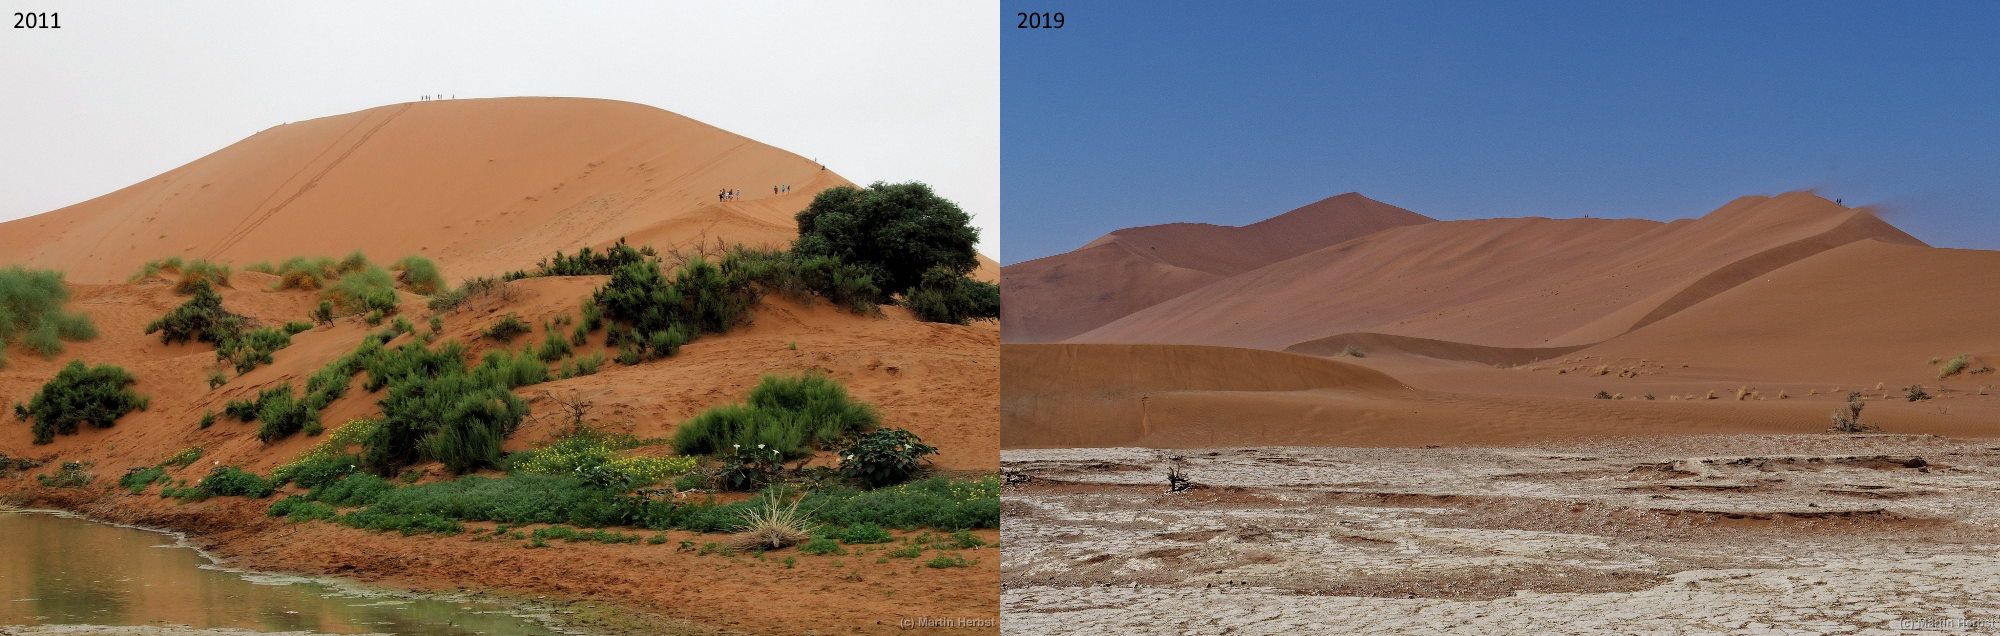 Kontraste: Namibia 2011 und 2019